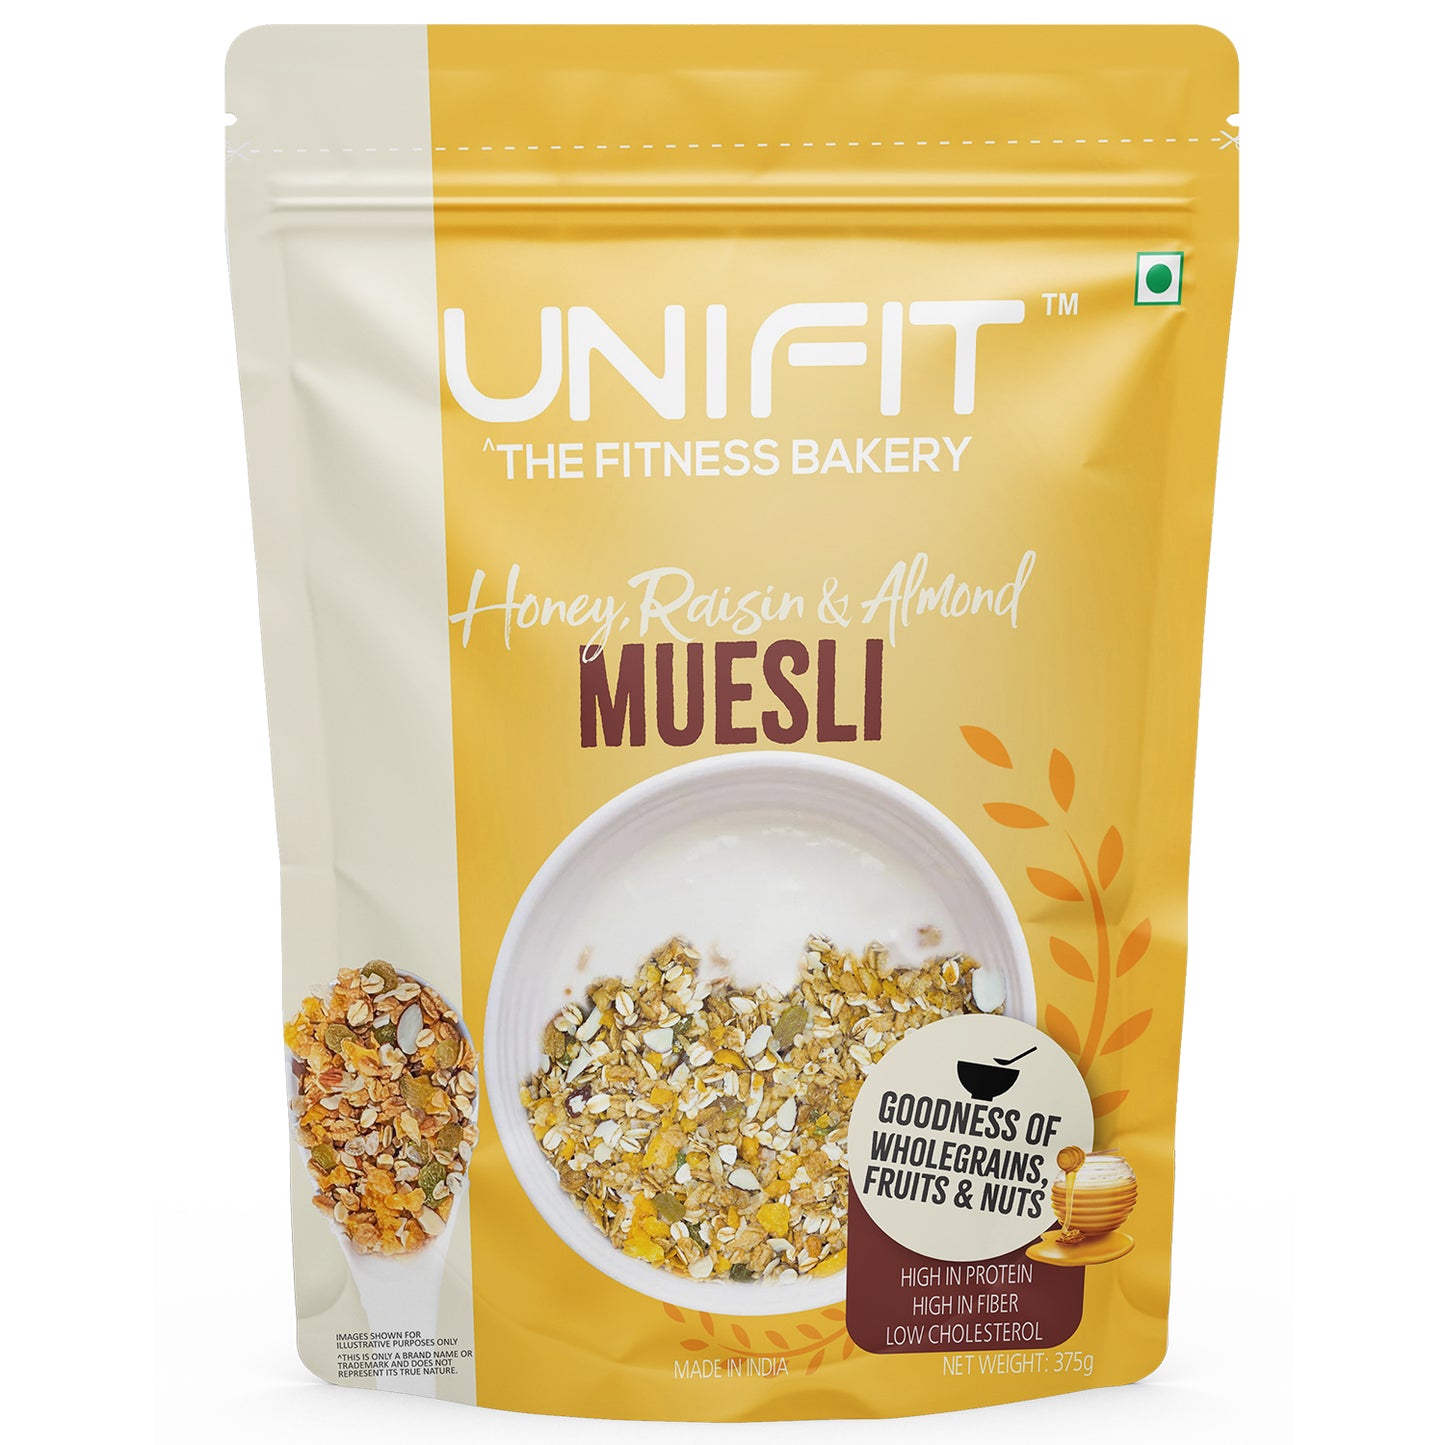 UNIFIT Muesli with Honey, Raisins & Almonds